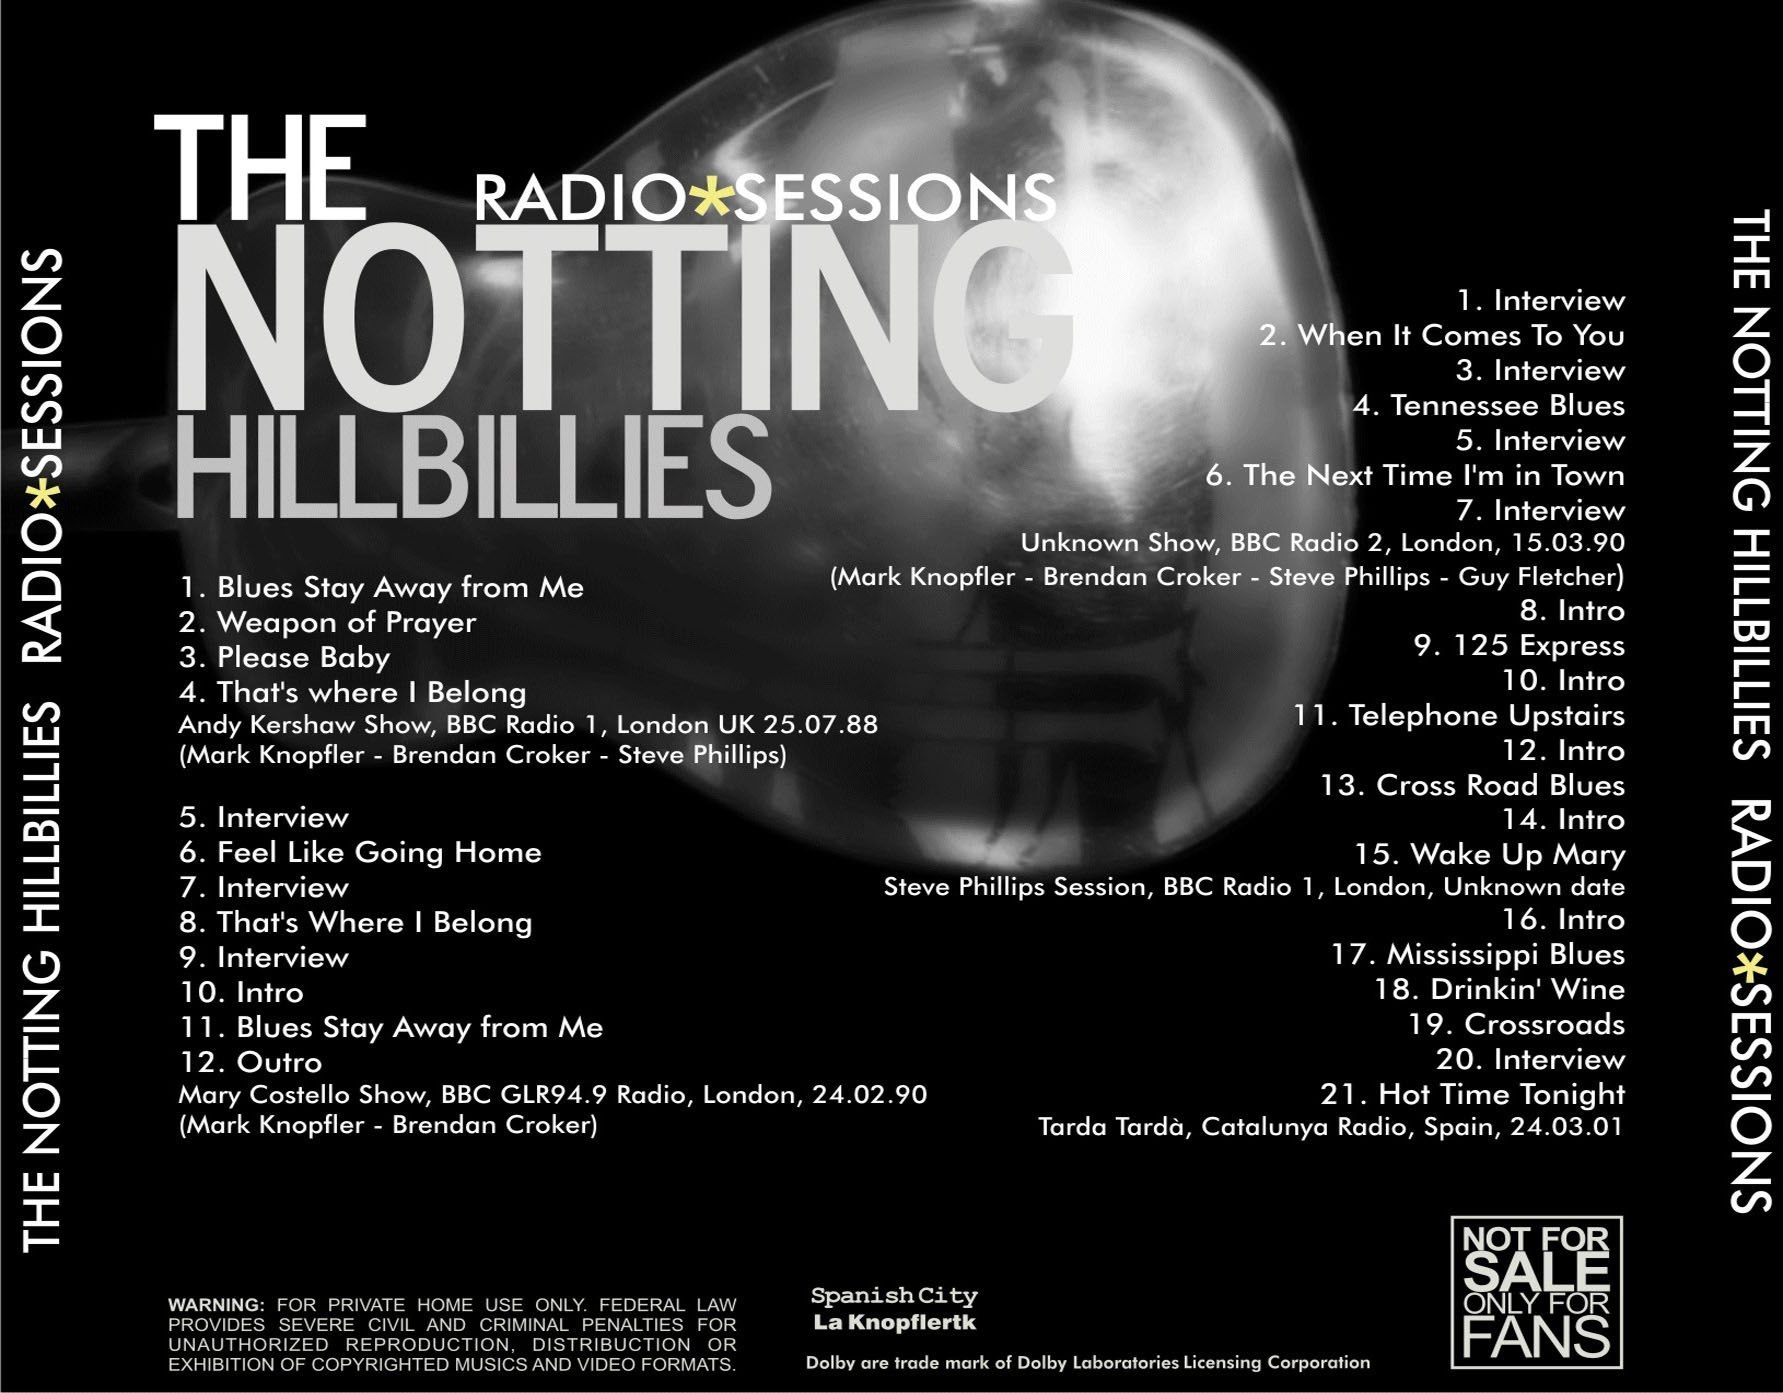 NottingHillbillies1988-22001RadioSessionsBBCLondonUK (1).jpg